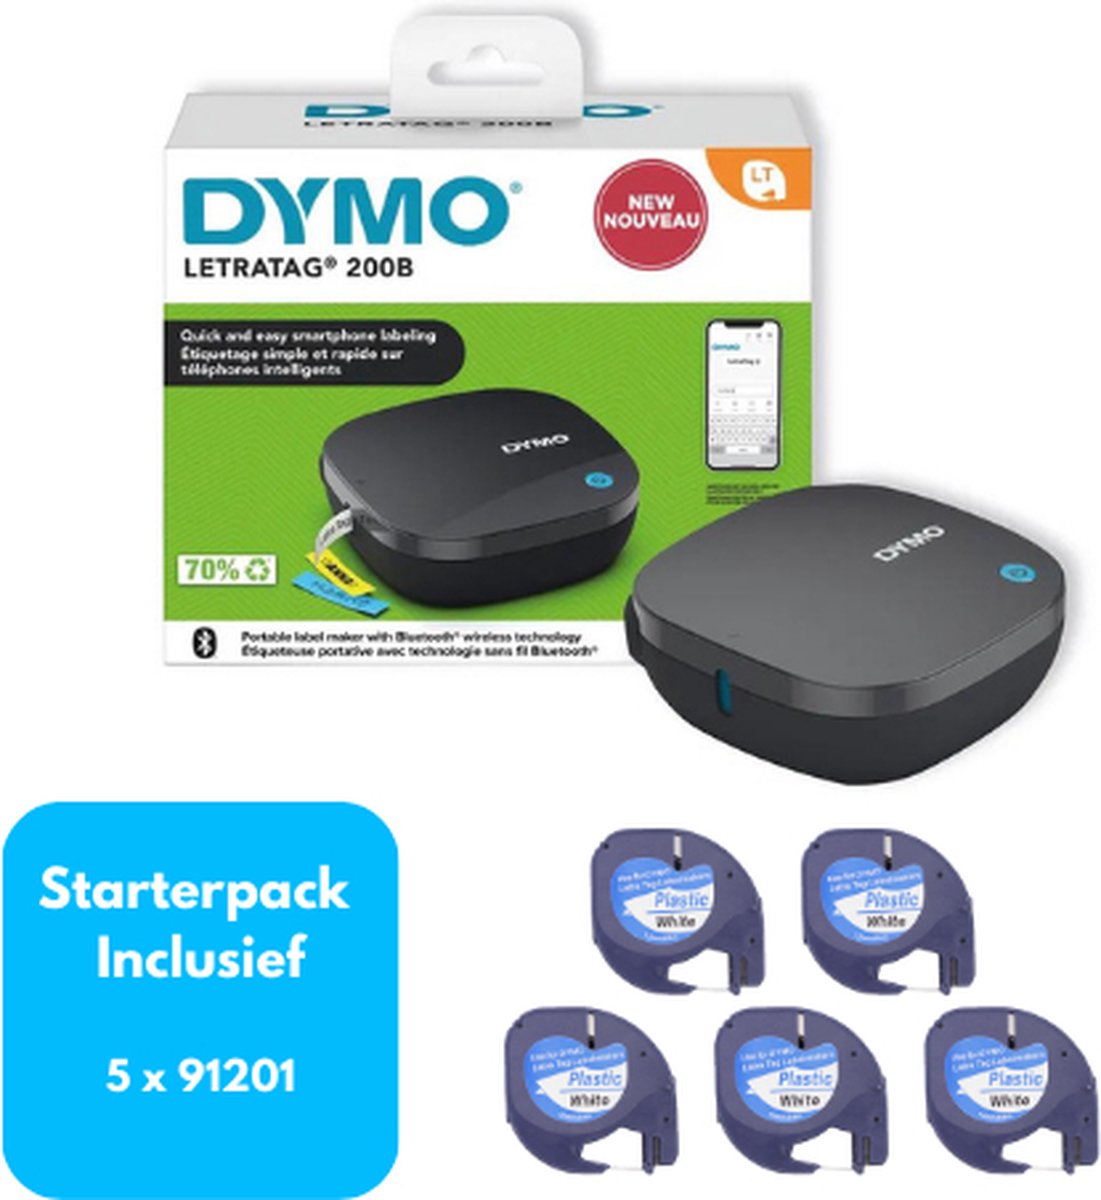 Dymo 200B - LetraTag - Labelprinter - Starterpack - Inclusief 5x 91201 zwart/wit Lettertape (Huismerk)